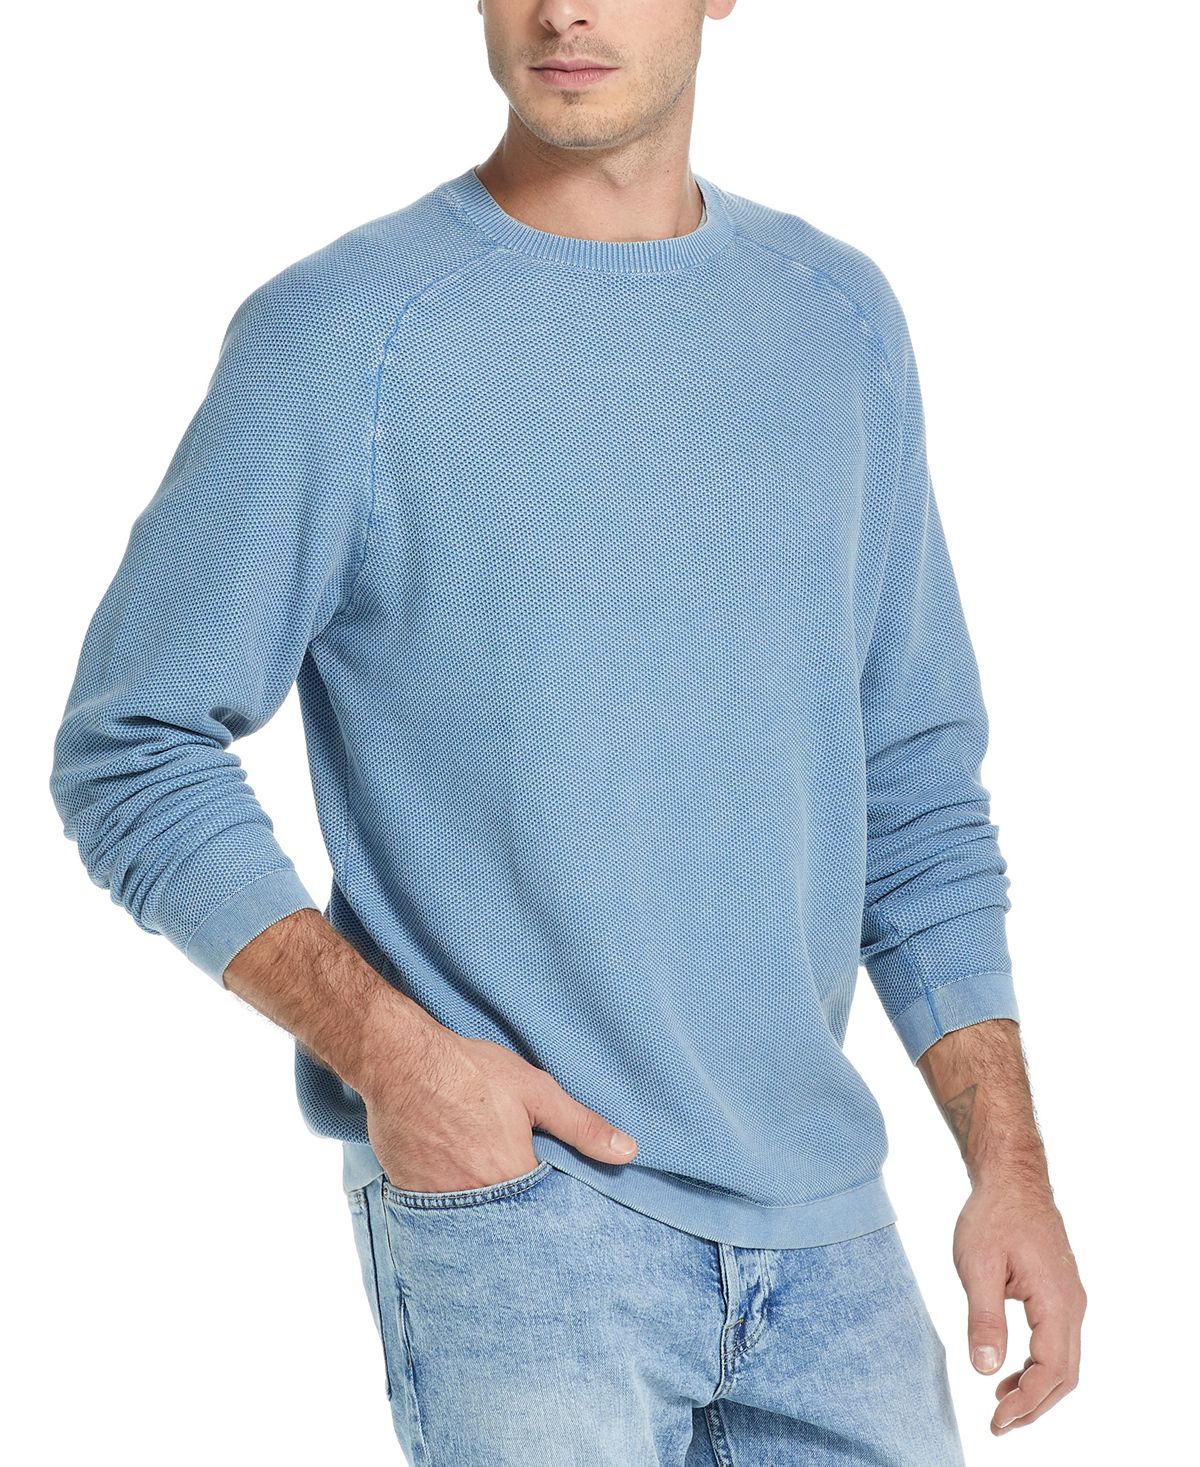 Weatherproof Vintage Stonewashed Sweater Faded Denim